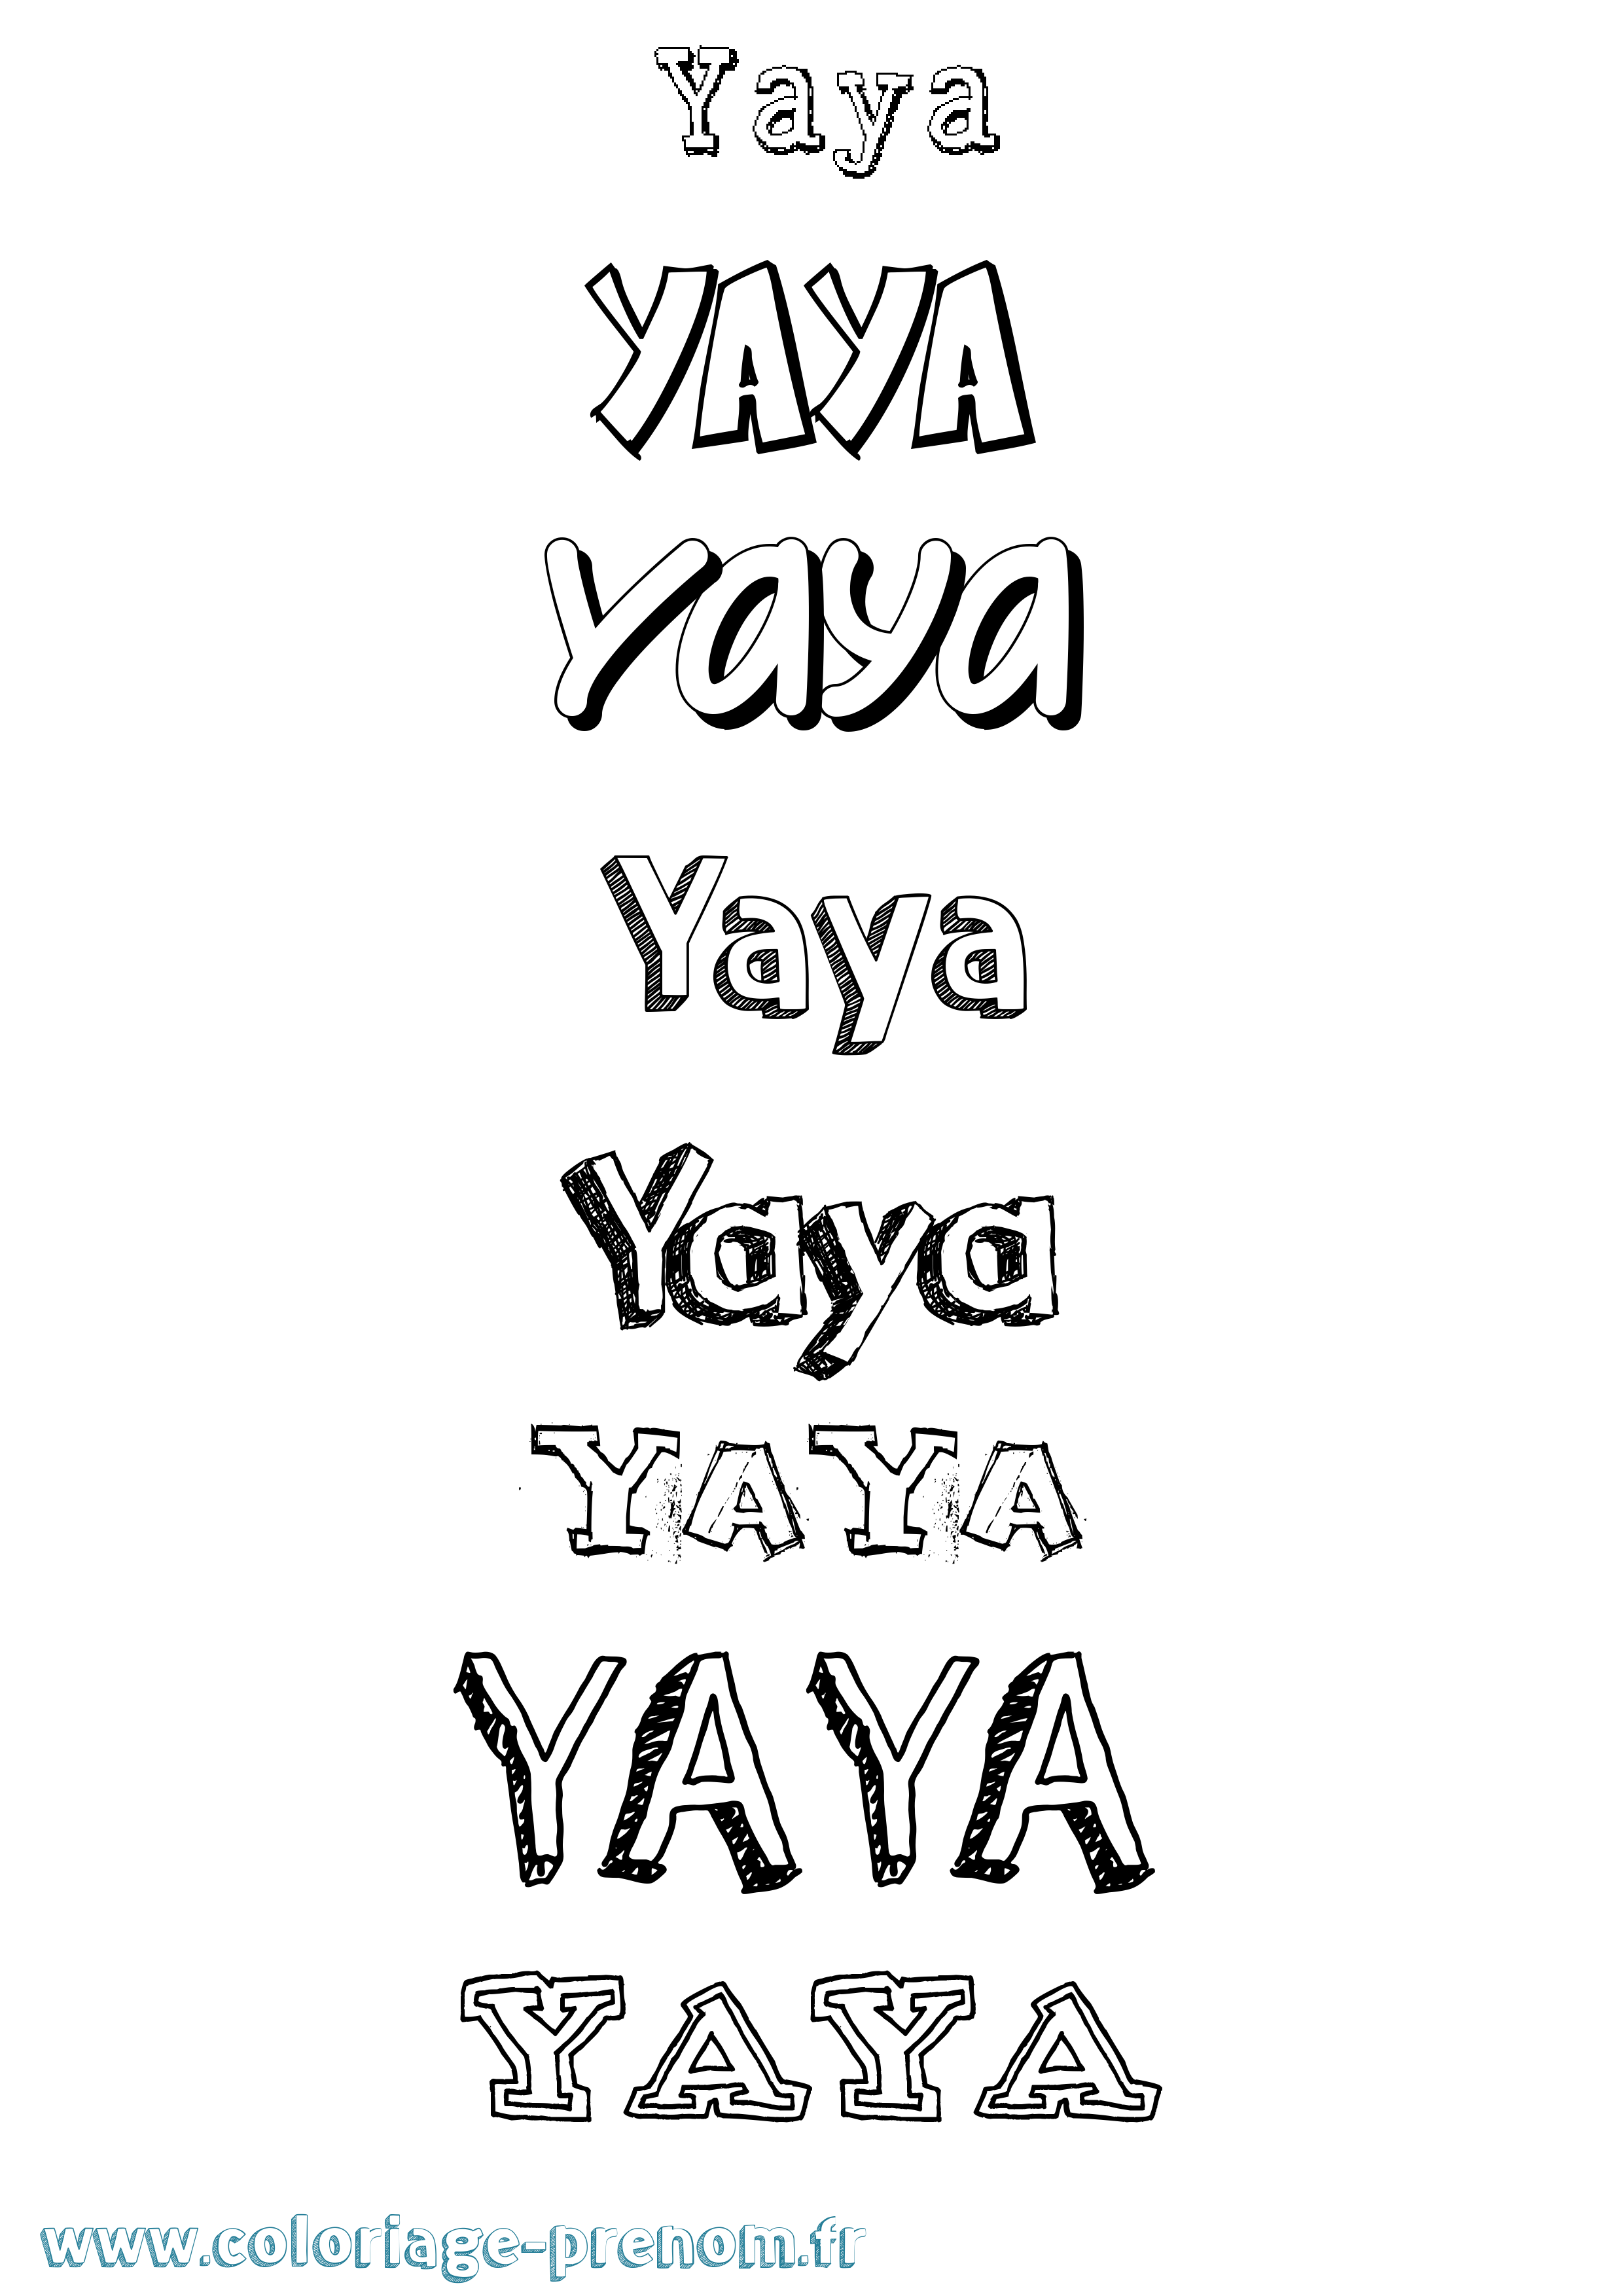 Coloriage prénom Yaya Dessiné